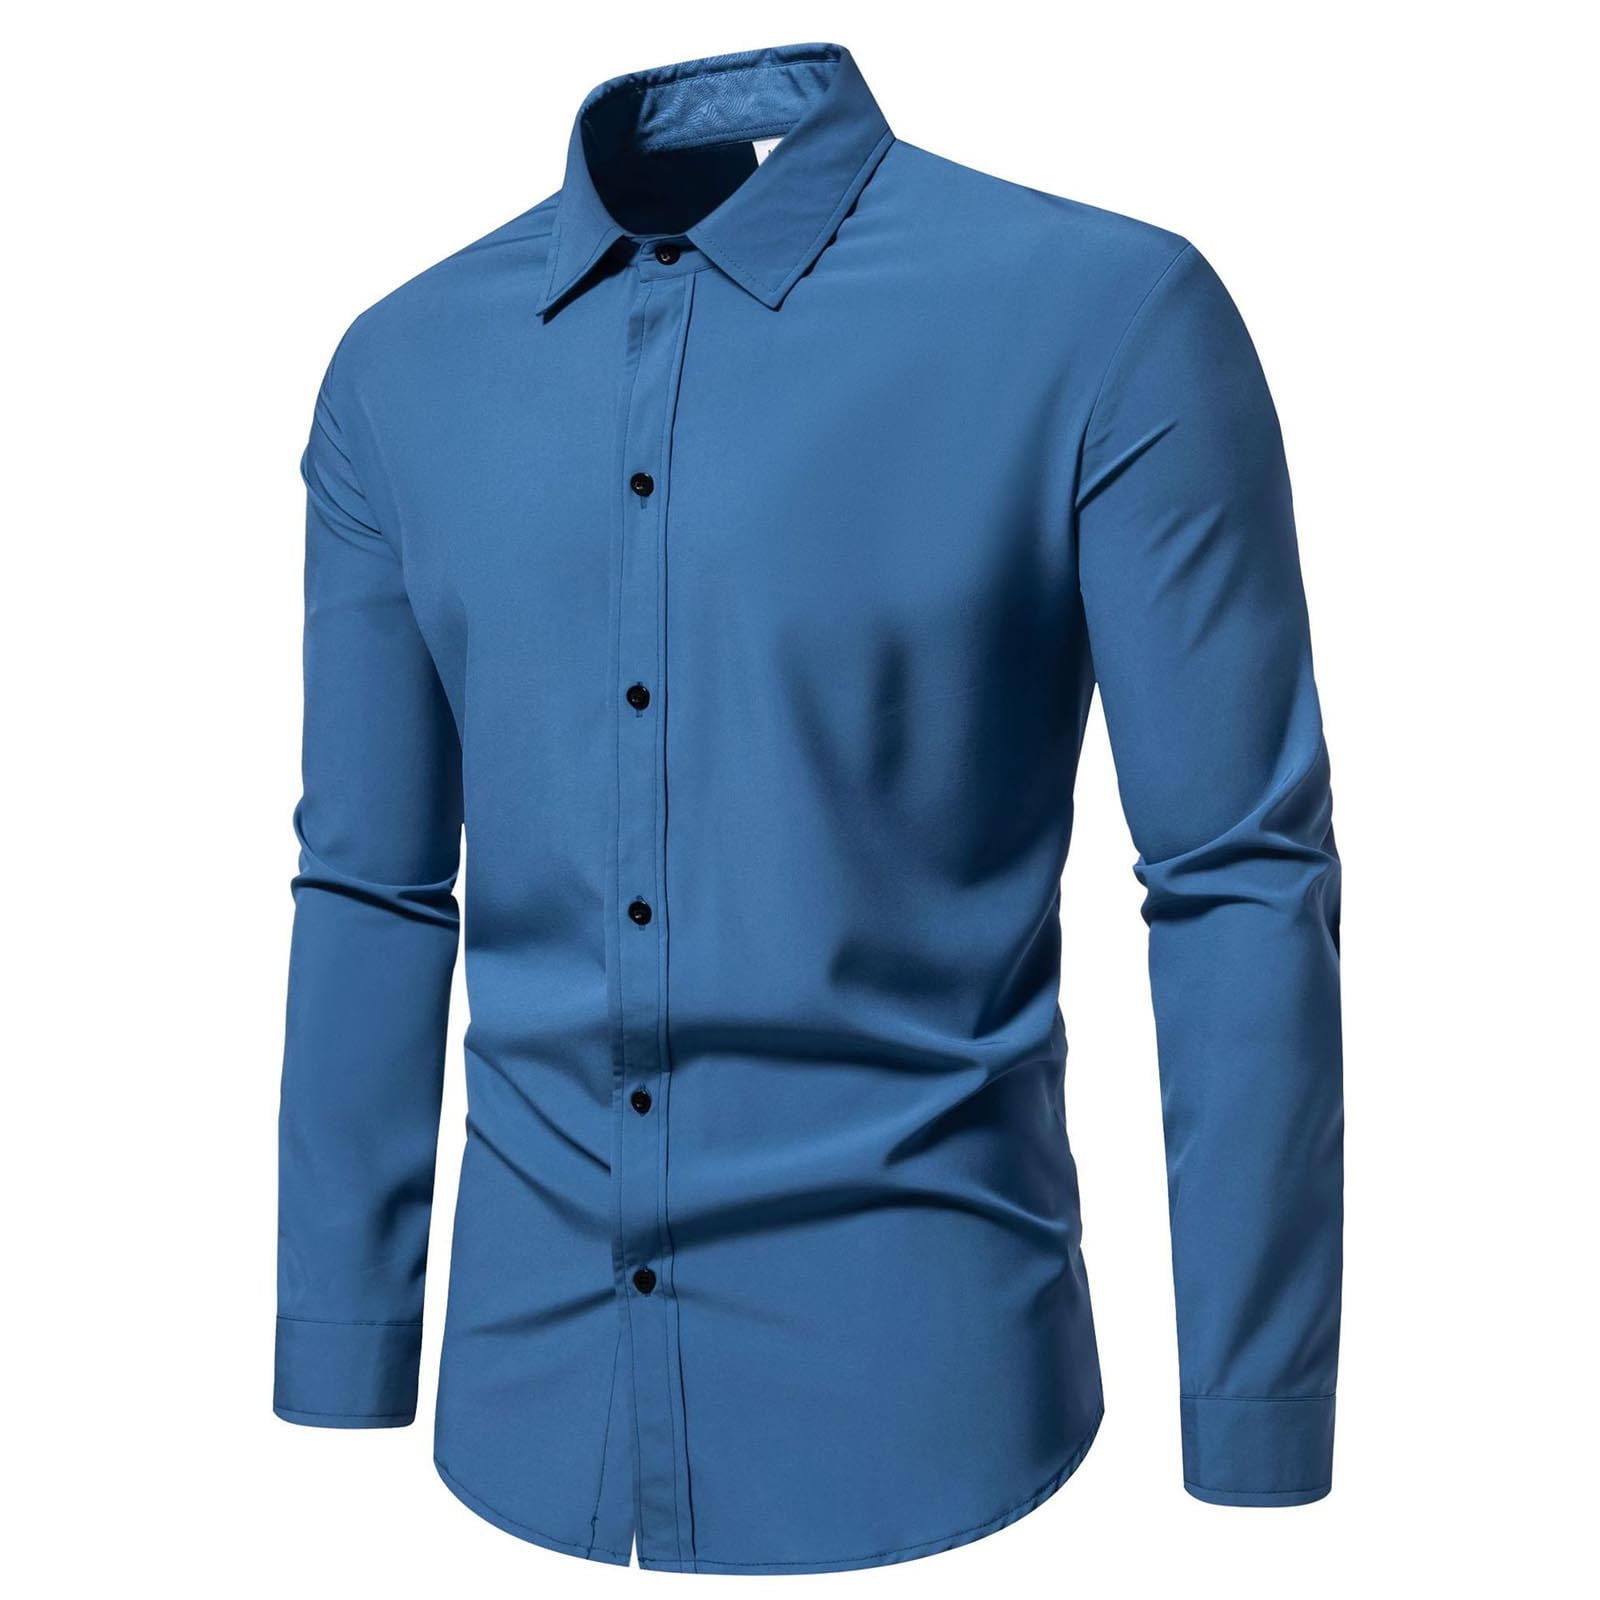 qolati Men's Business Dress Shirts Casual Long Sleeve Button Up Shirts ...